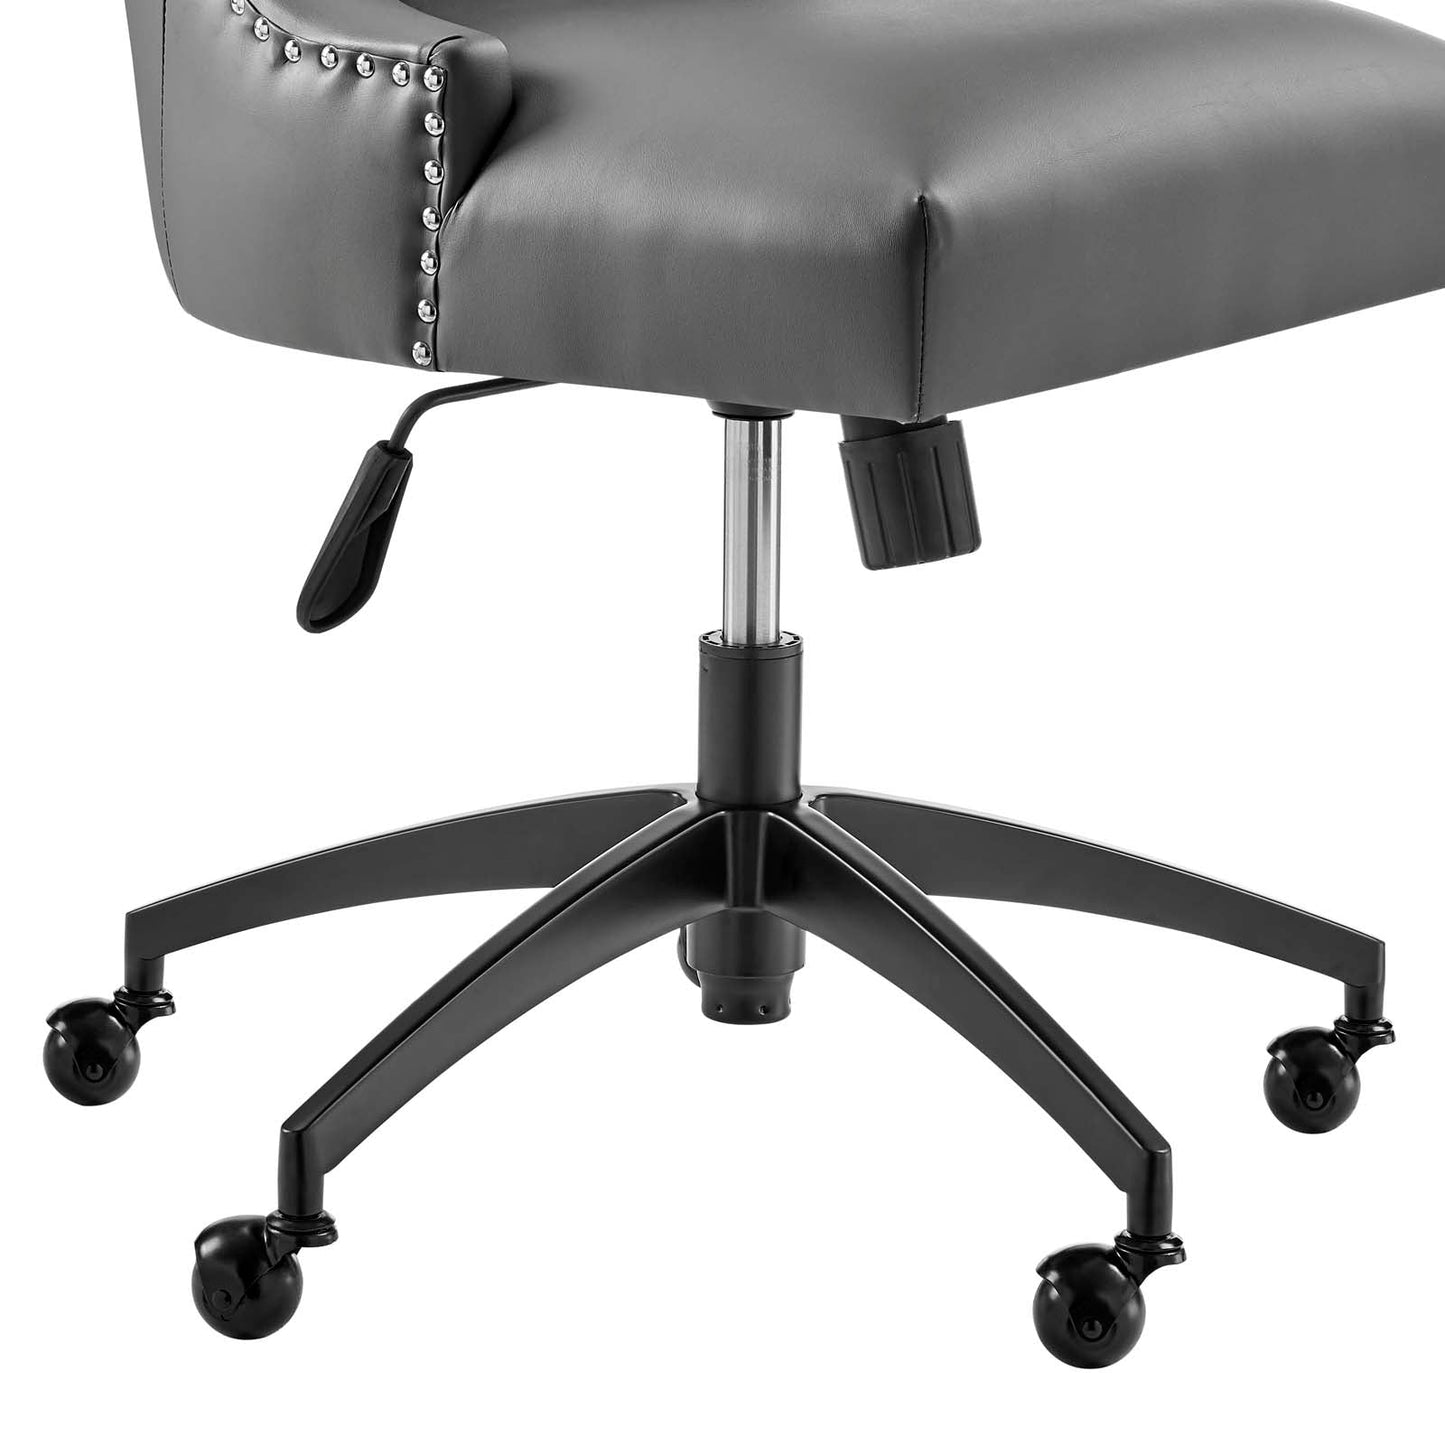 Harrington Channel Tufted Vegan Leather Office Chair